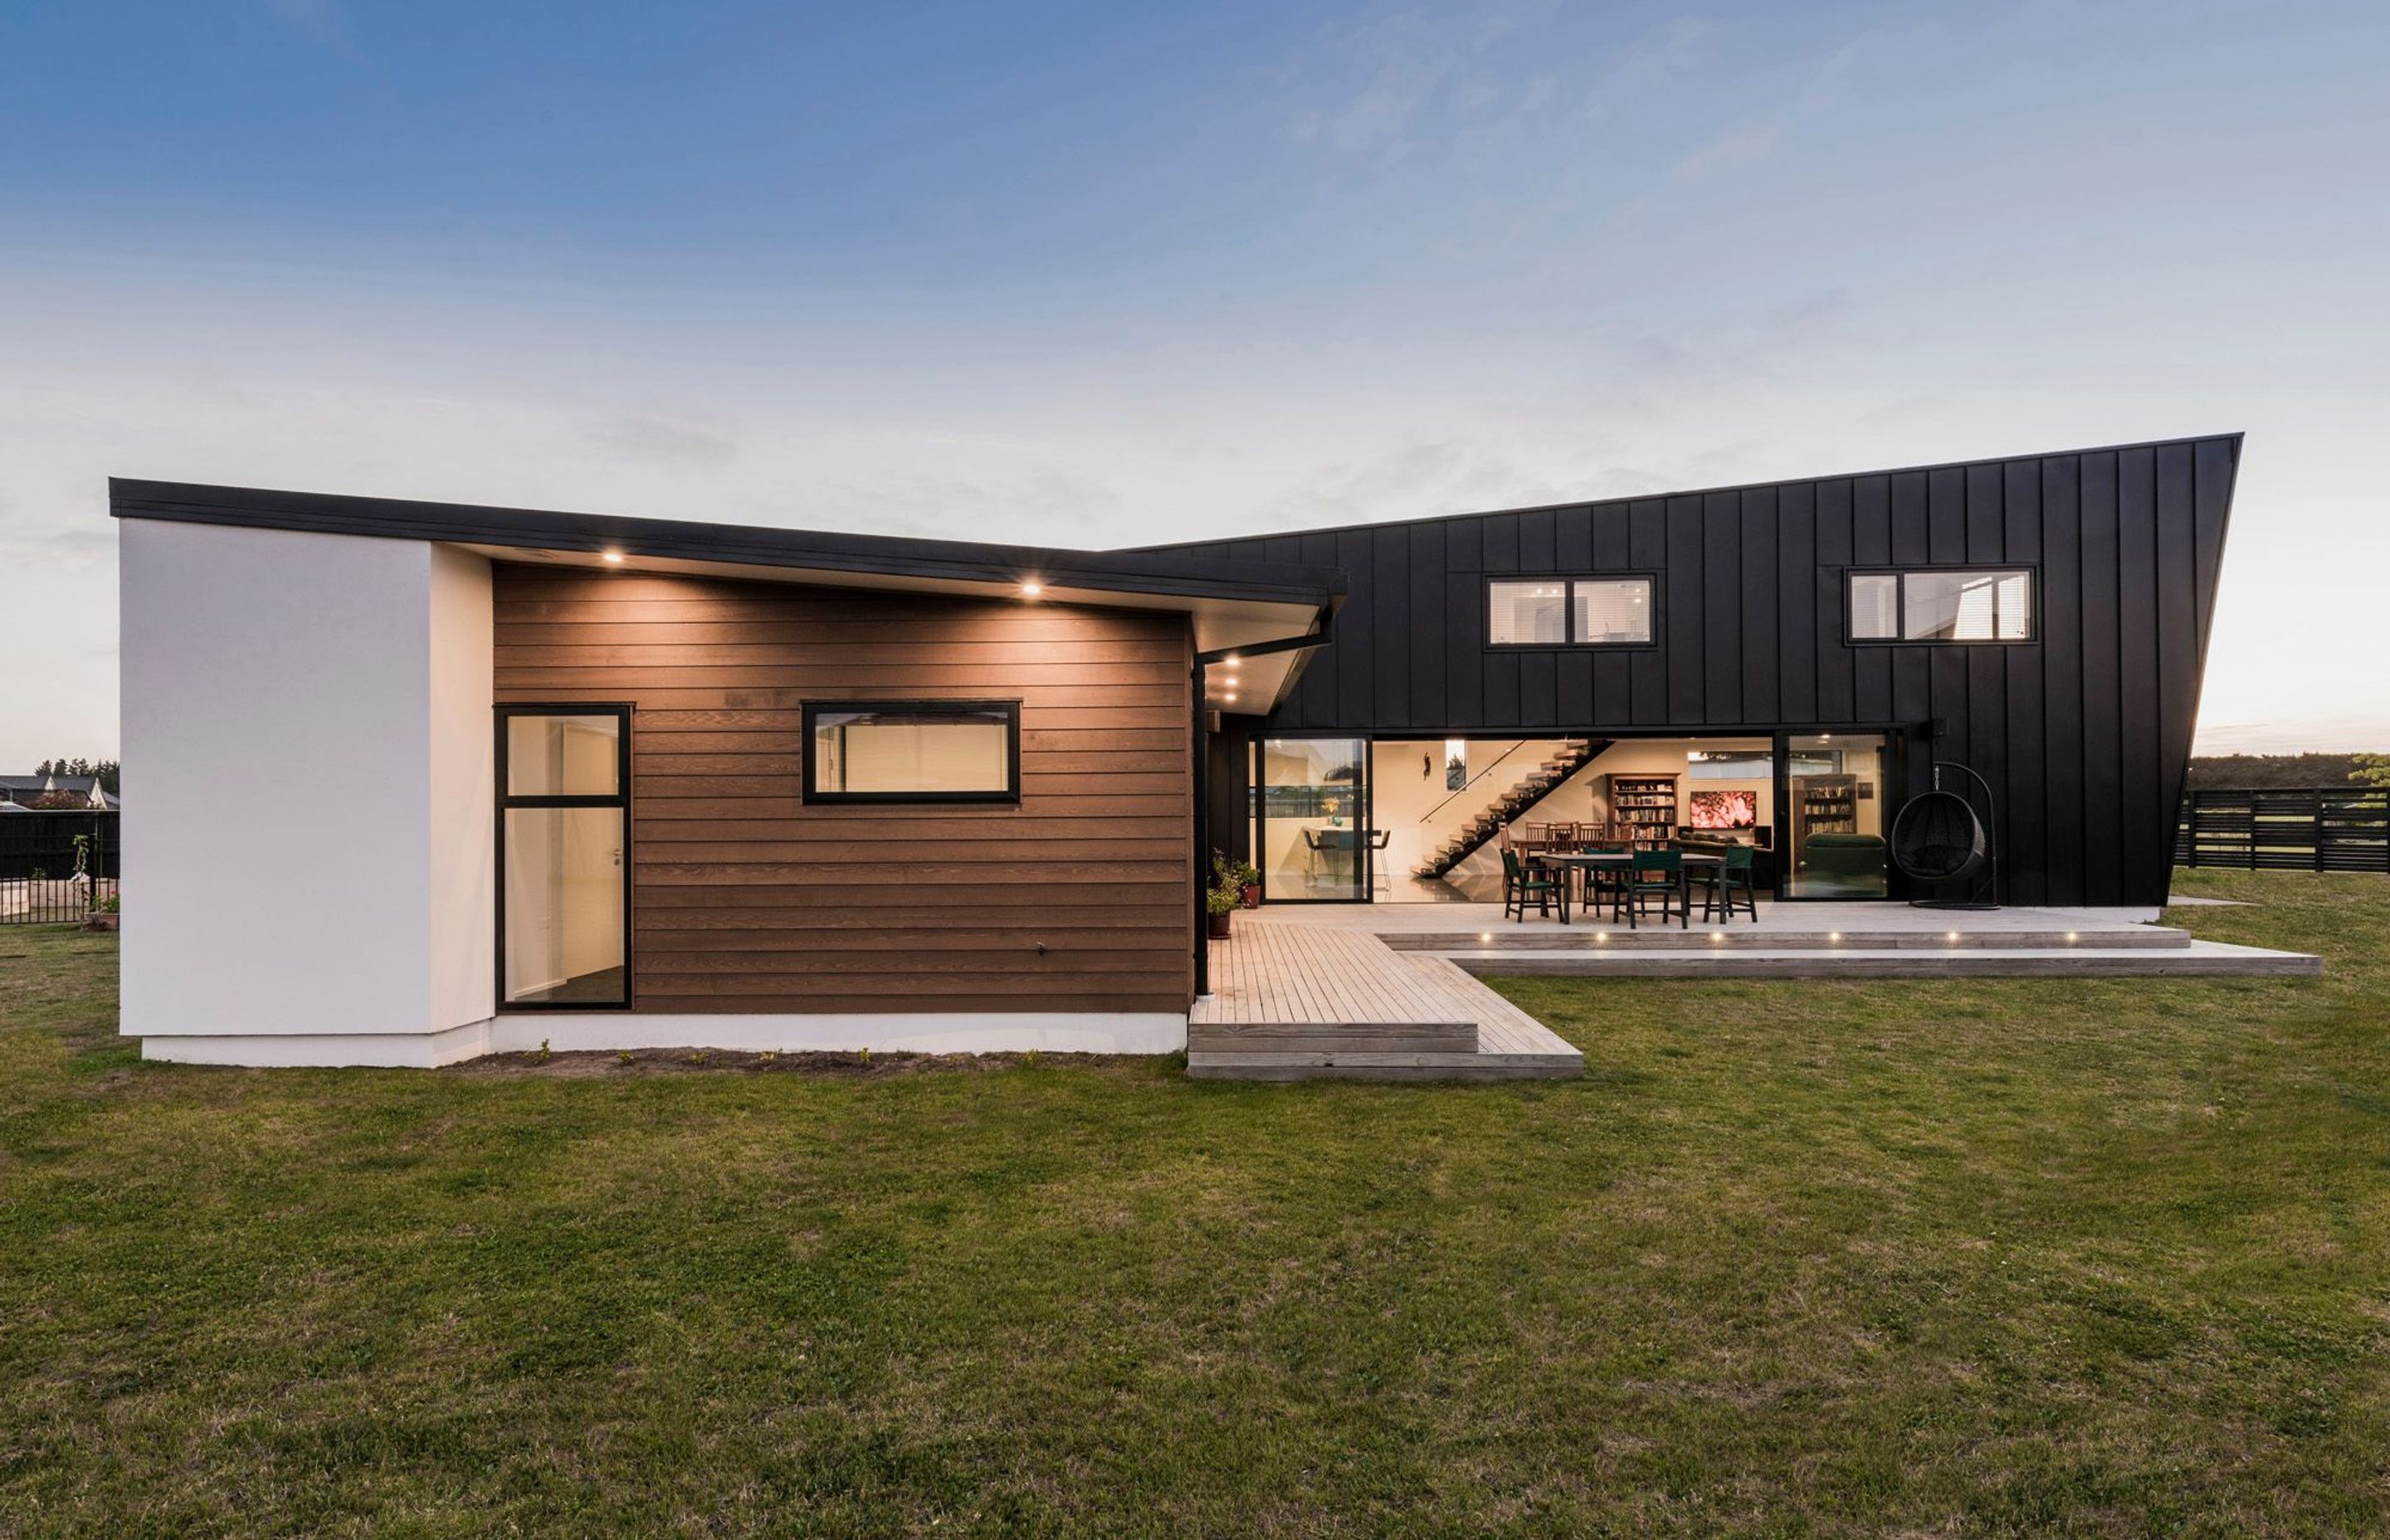 Higham Architecture's West House achieved the maximum 5-Star certification under Lifemark’s design standards.